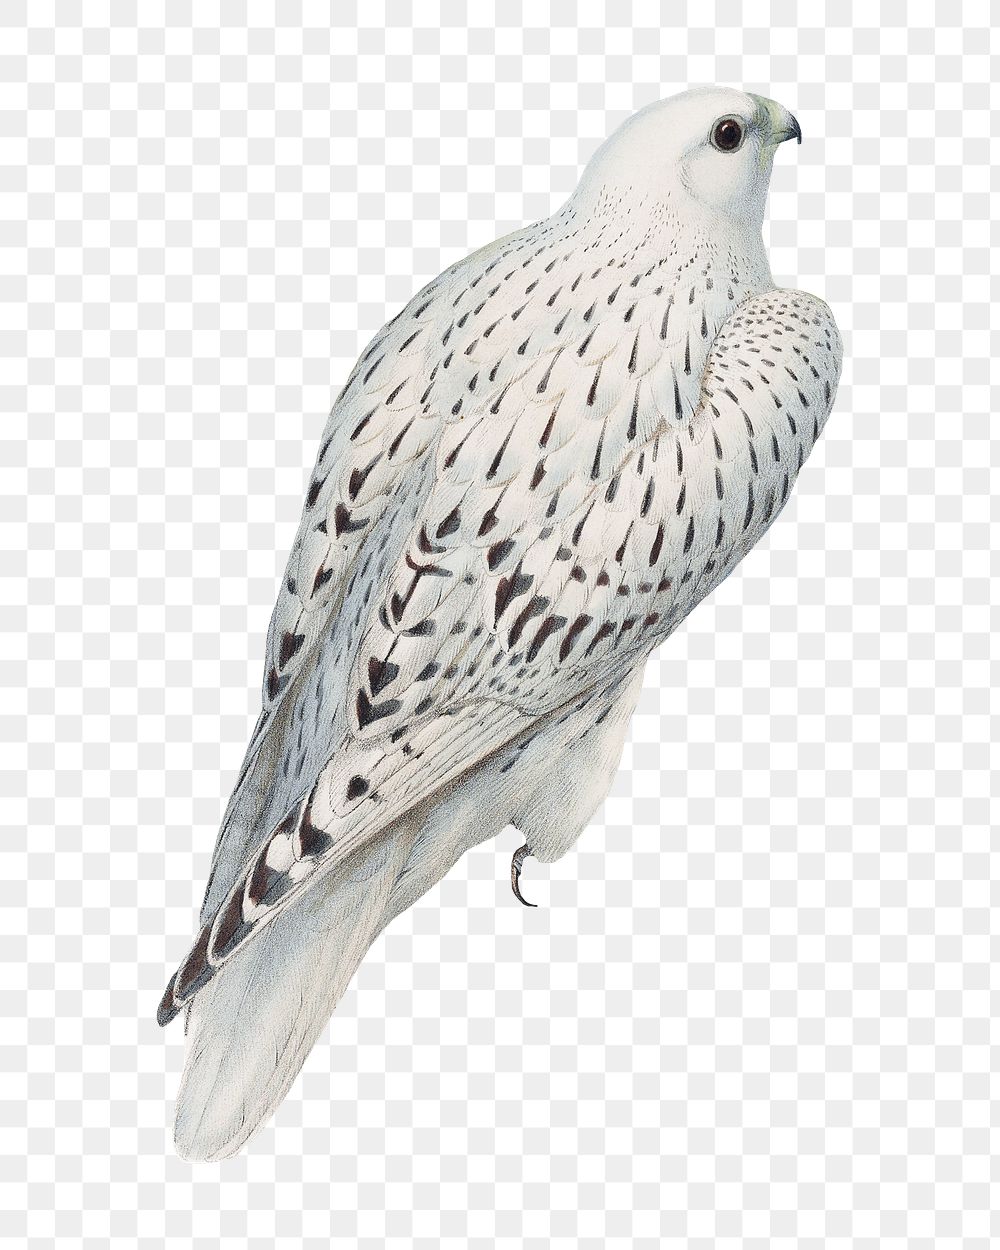 Greenland falcon png bird sticker, vintage animal illustration, transparent background